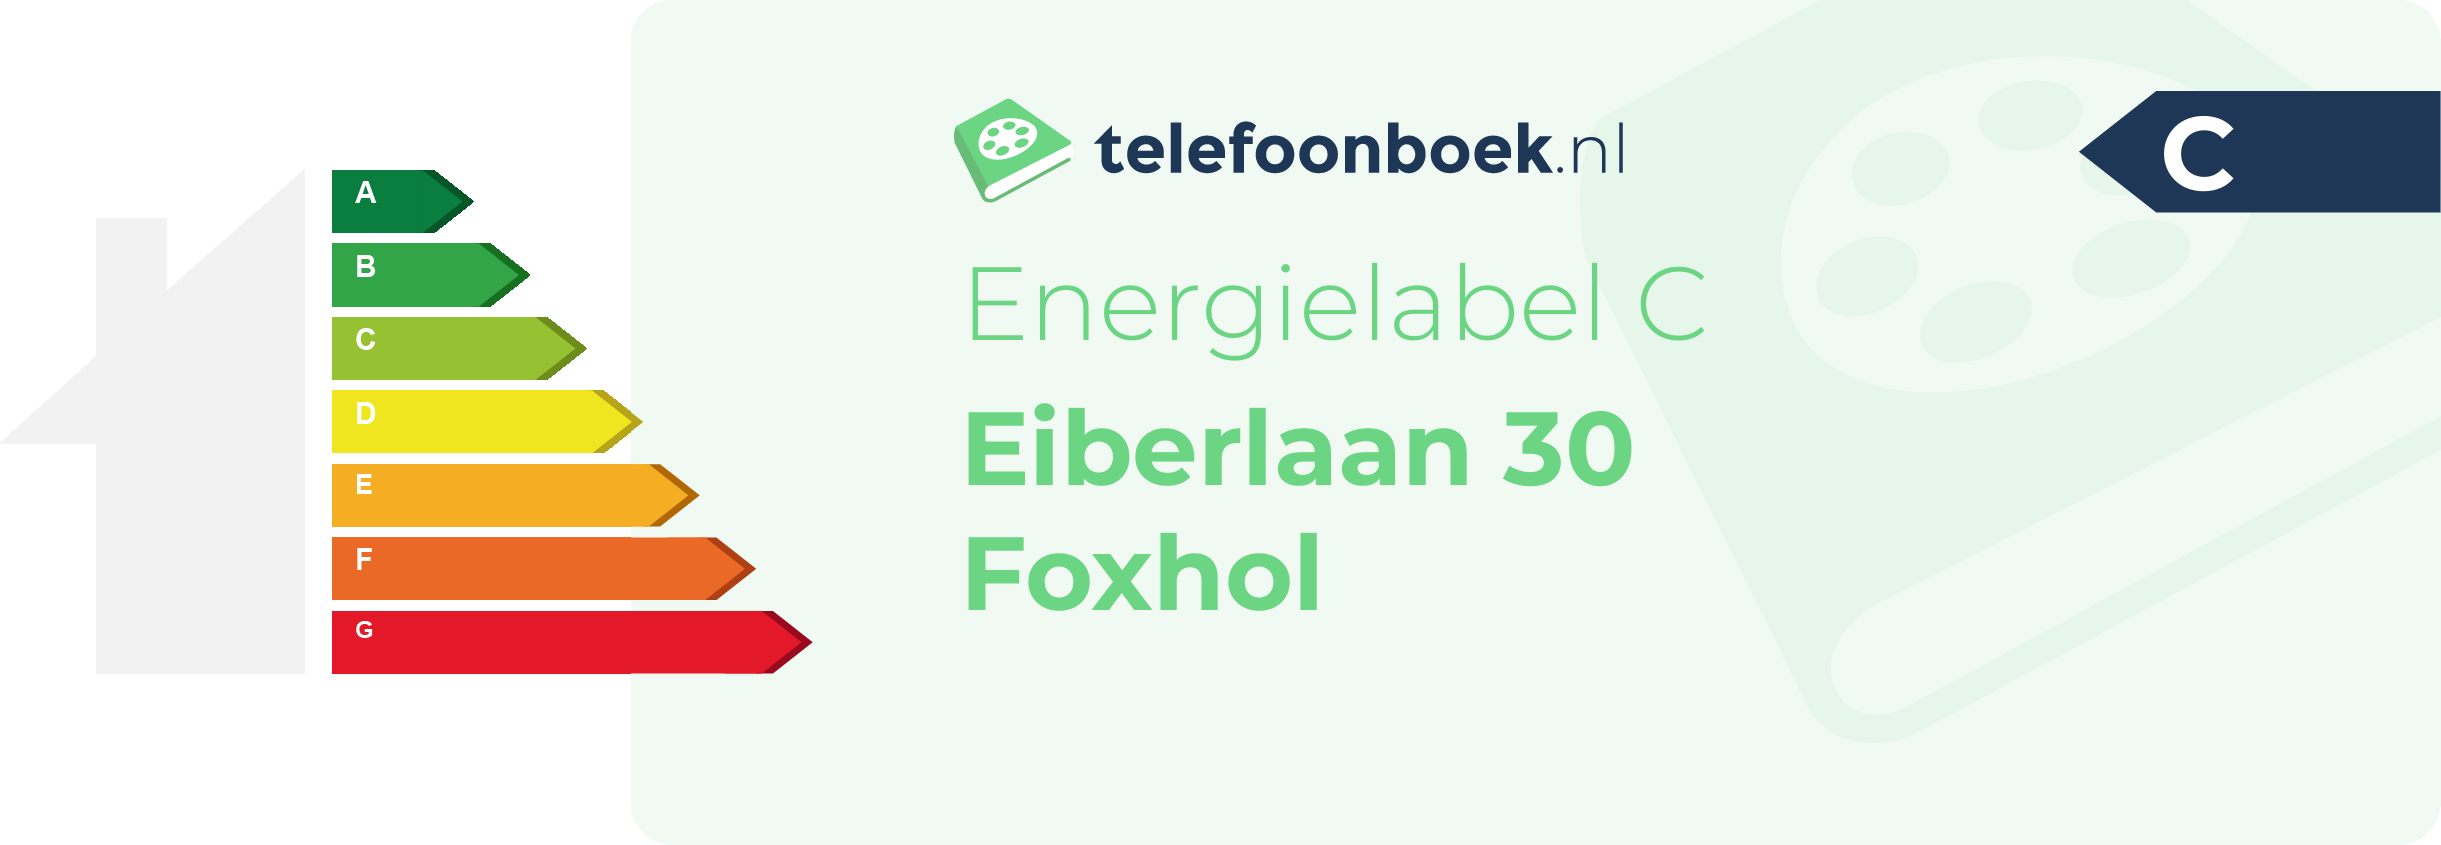 Energielabel Eiberlaan 30 Foxhol